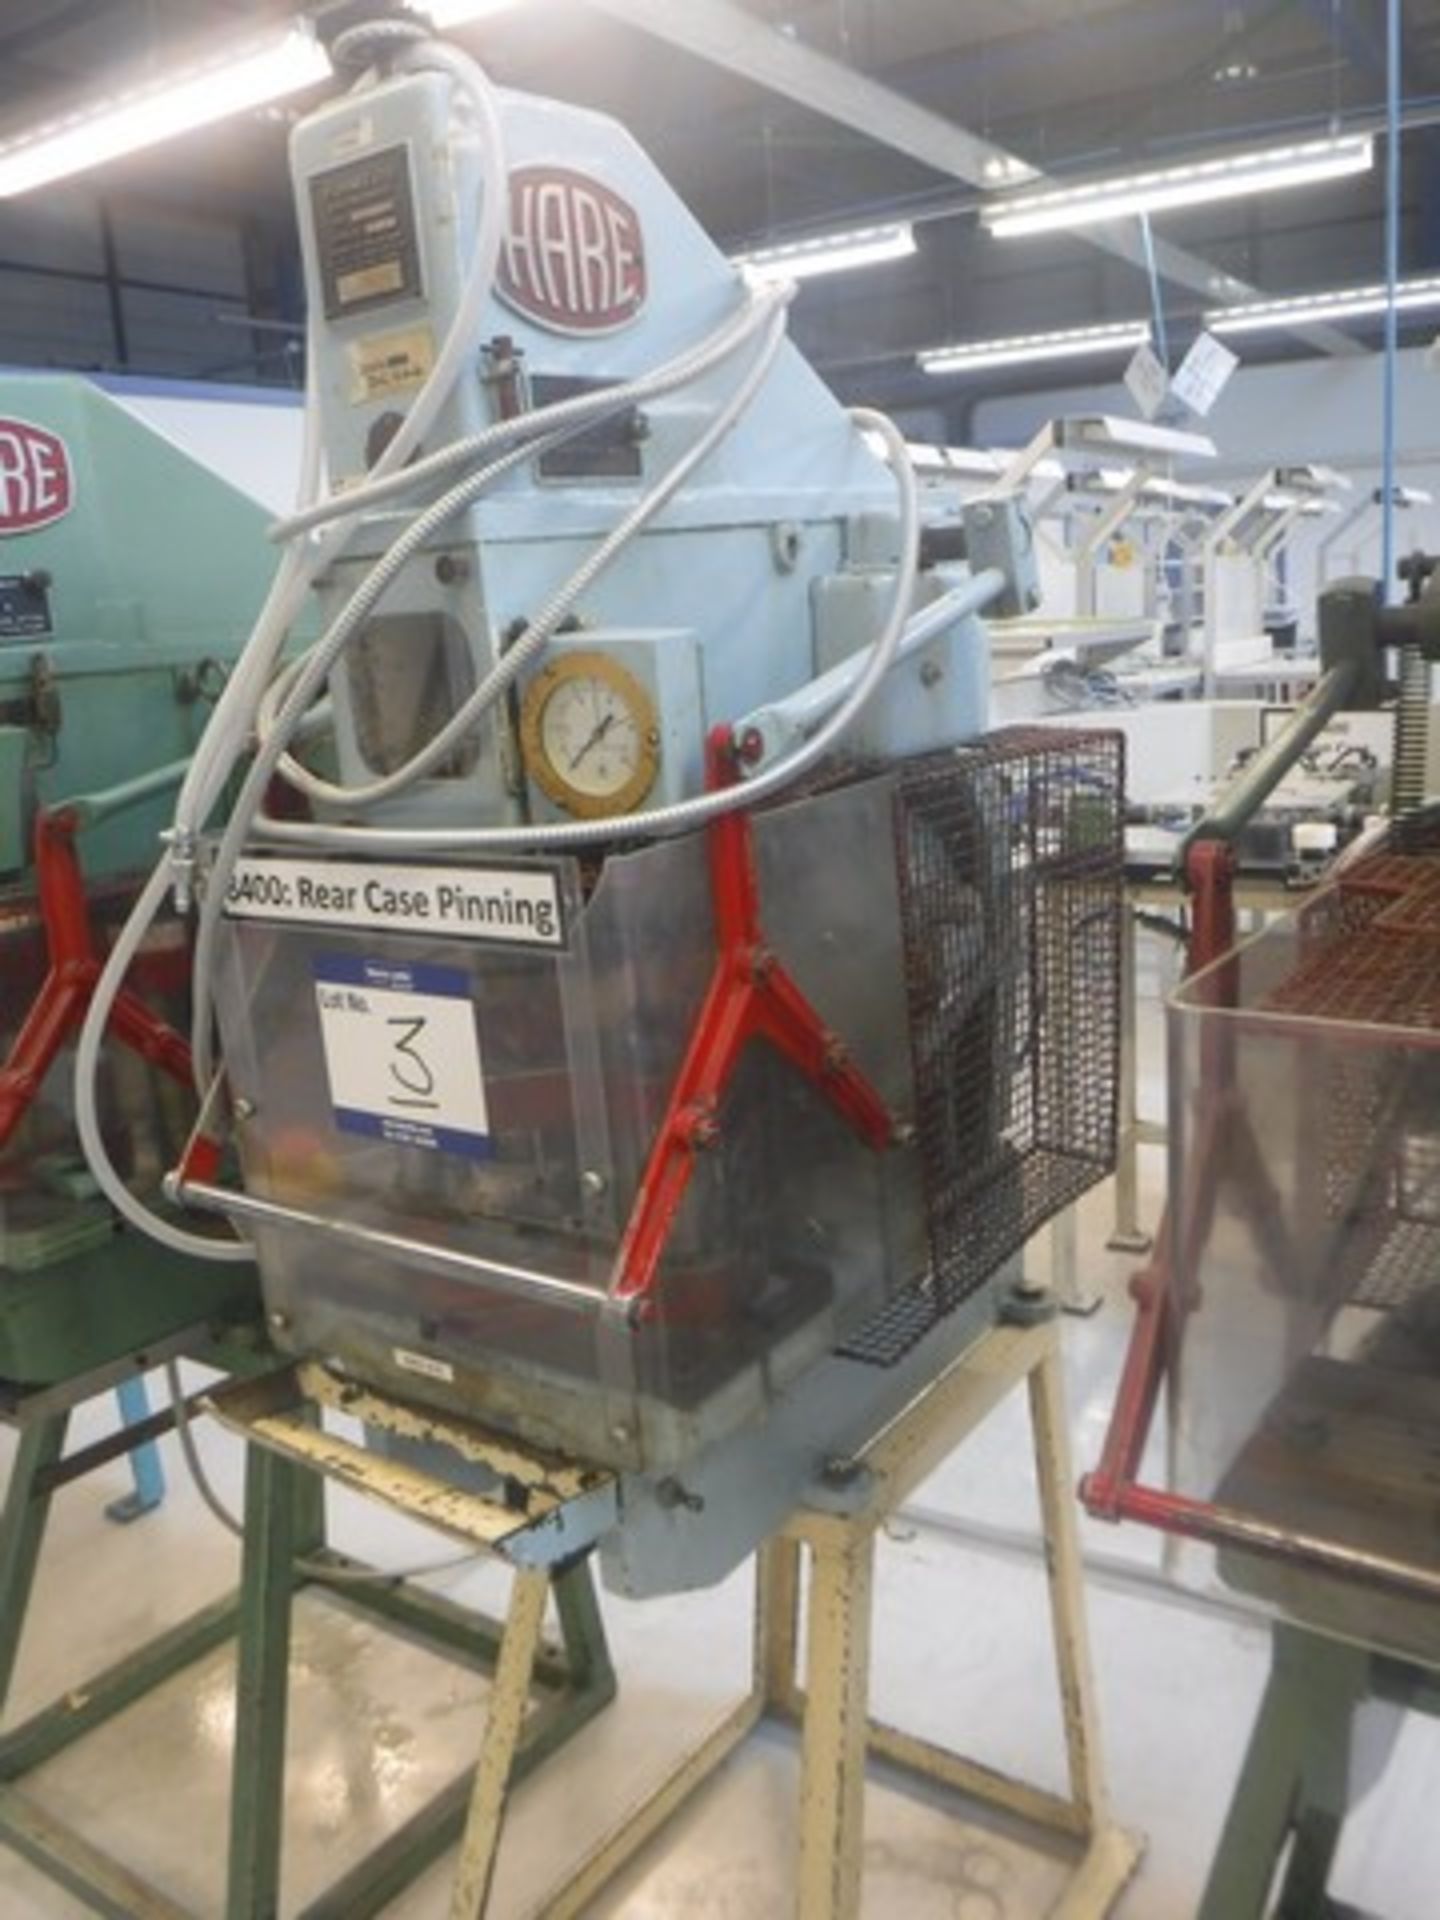 HARE 5BS hydraulic press SN - 7192 - Bild 2 aus 3